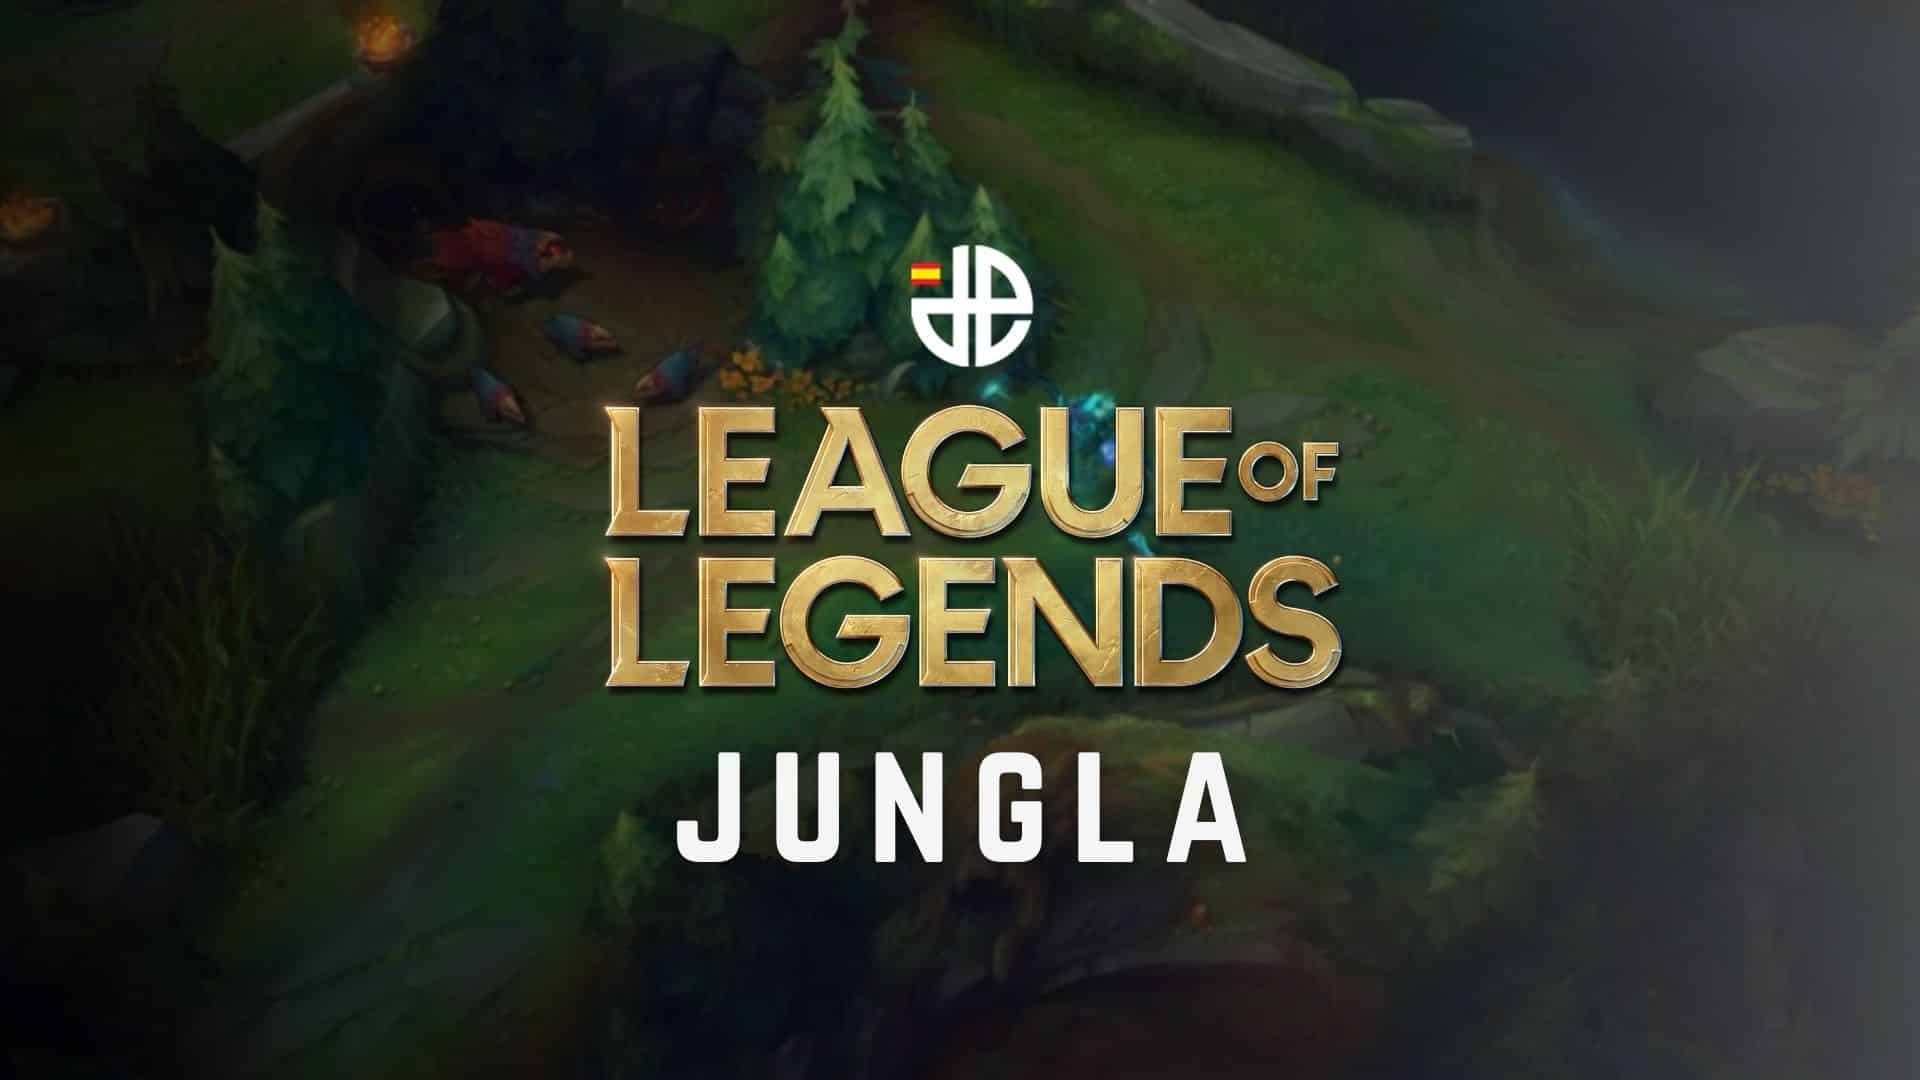 mejores campeones jungla league of legends